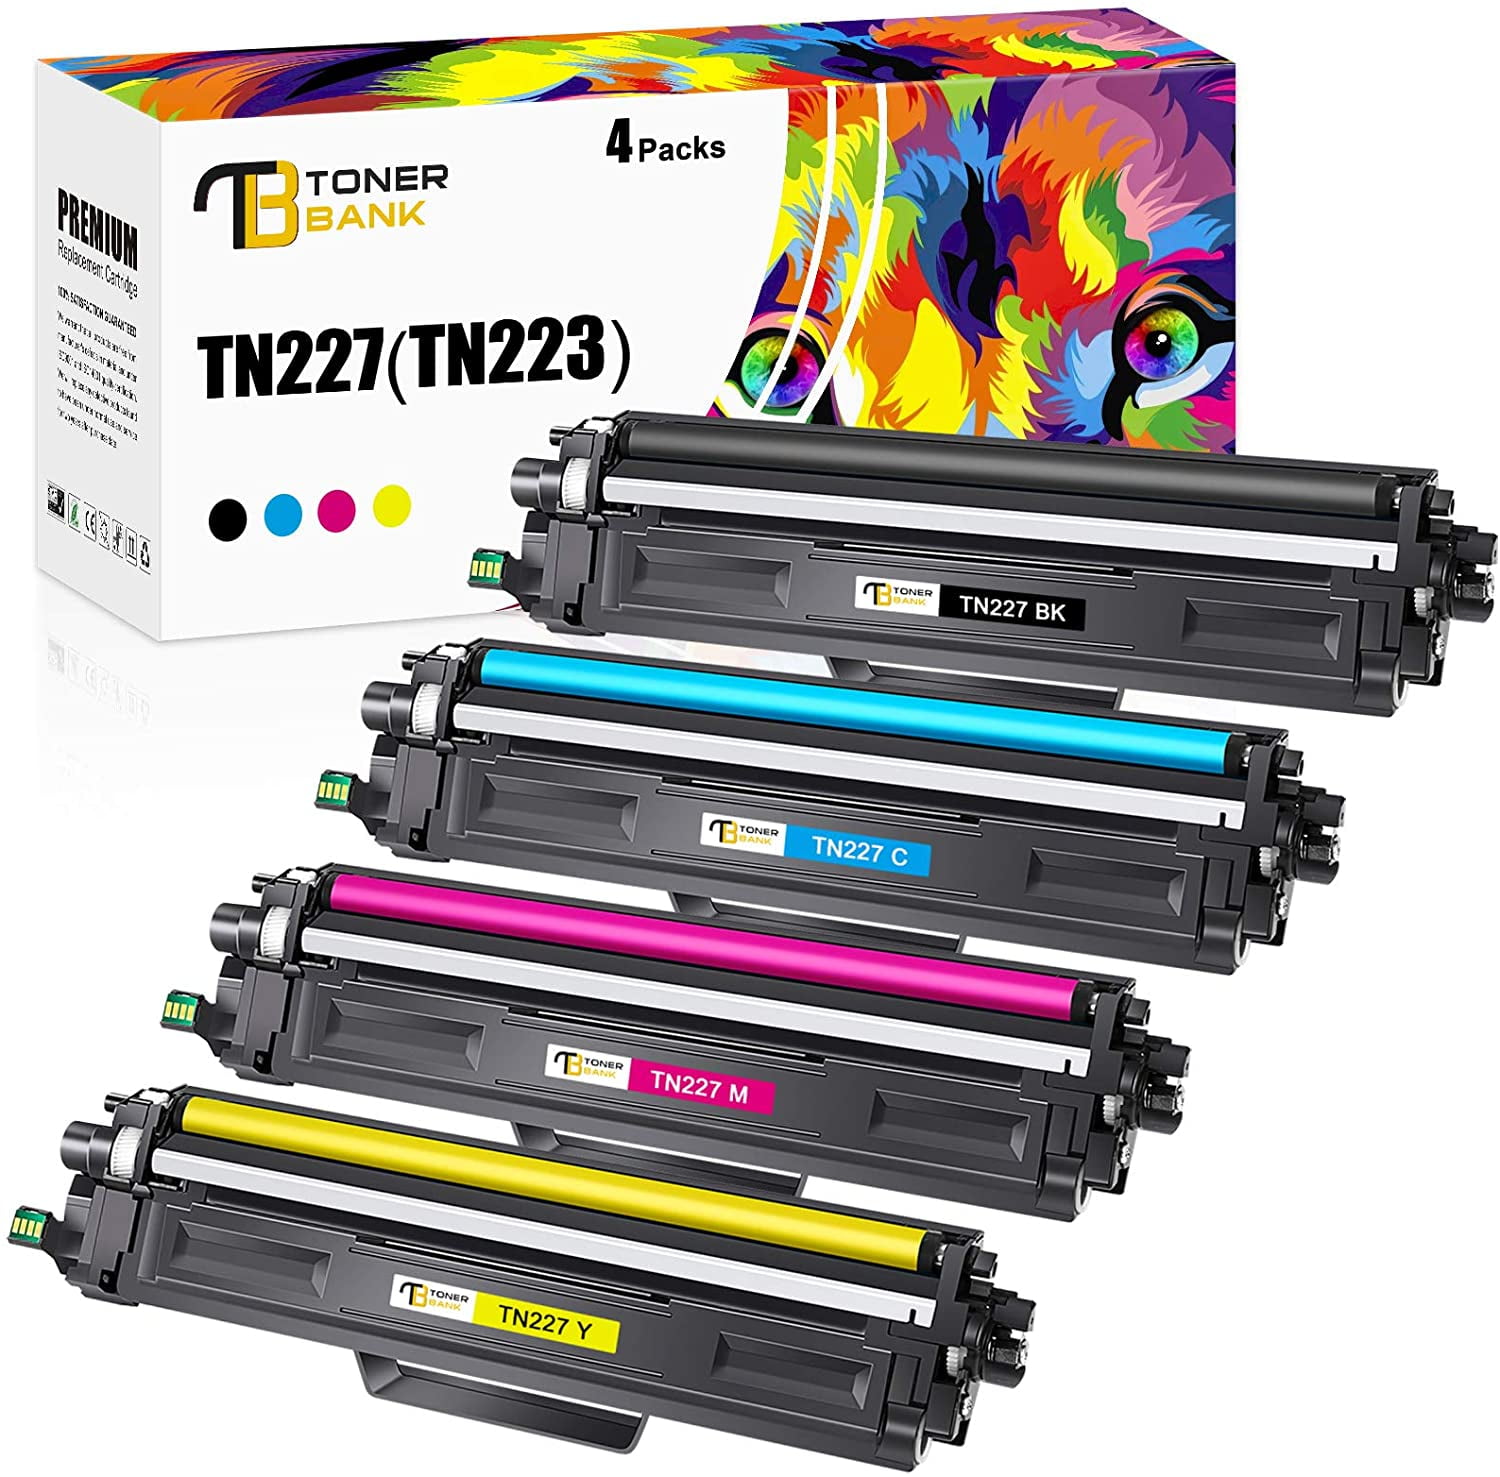 TN243 TN247 Toner Cartridge for Brother, Compatible HL-L3210CW HL-L3230CDW  HL-L3270CDW DCP-L3510CDW DCP-L3550CDW MFC-L3710CW MFC-L3730CDN MFC-L3750CDW